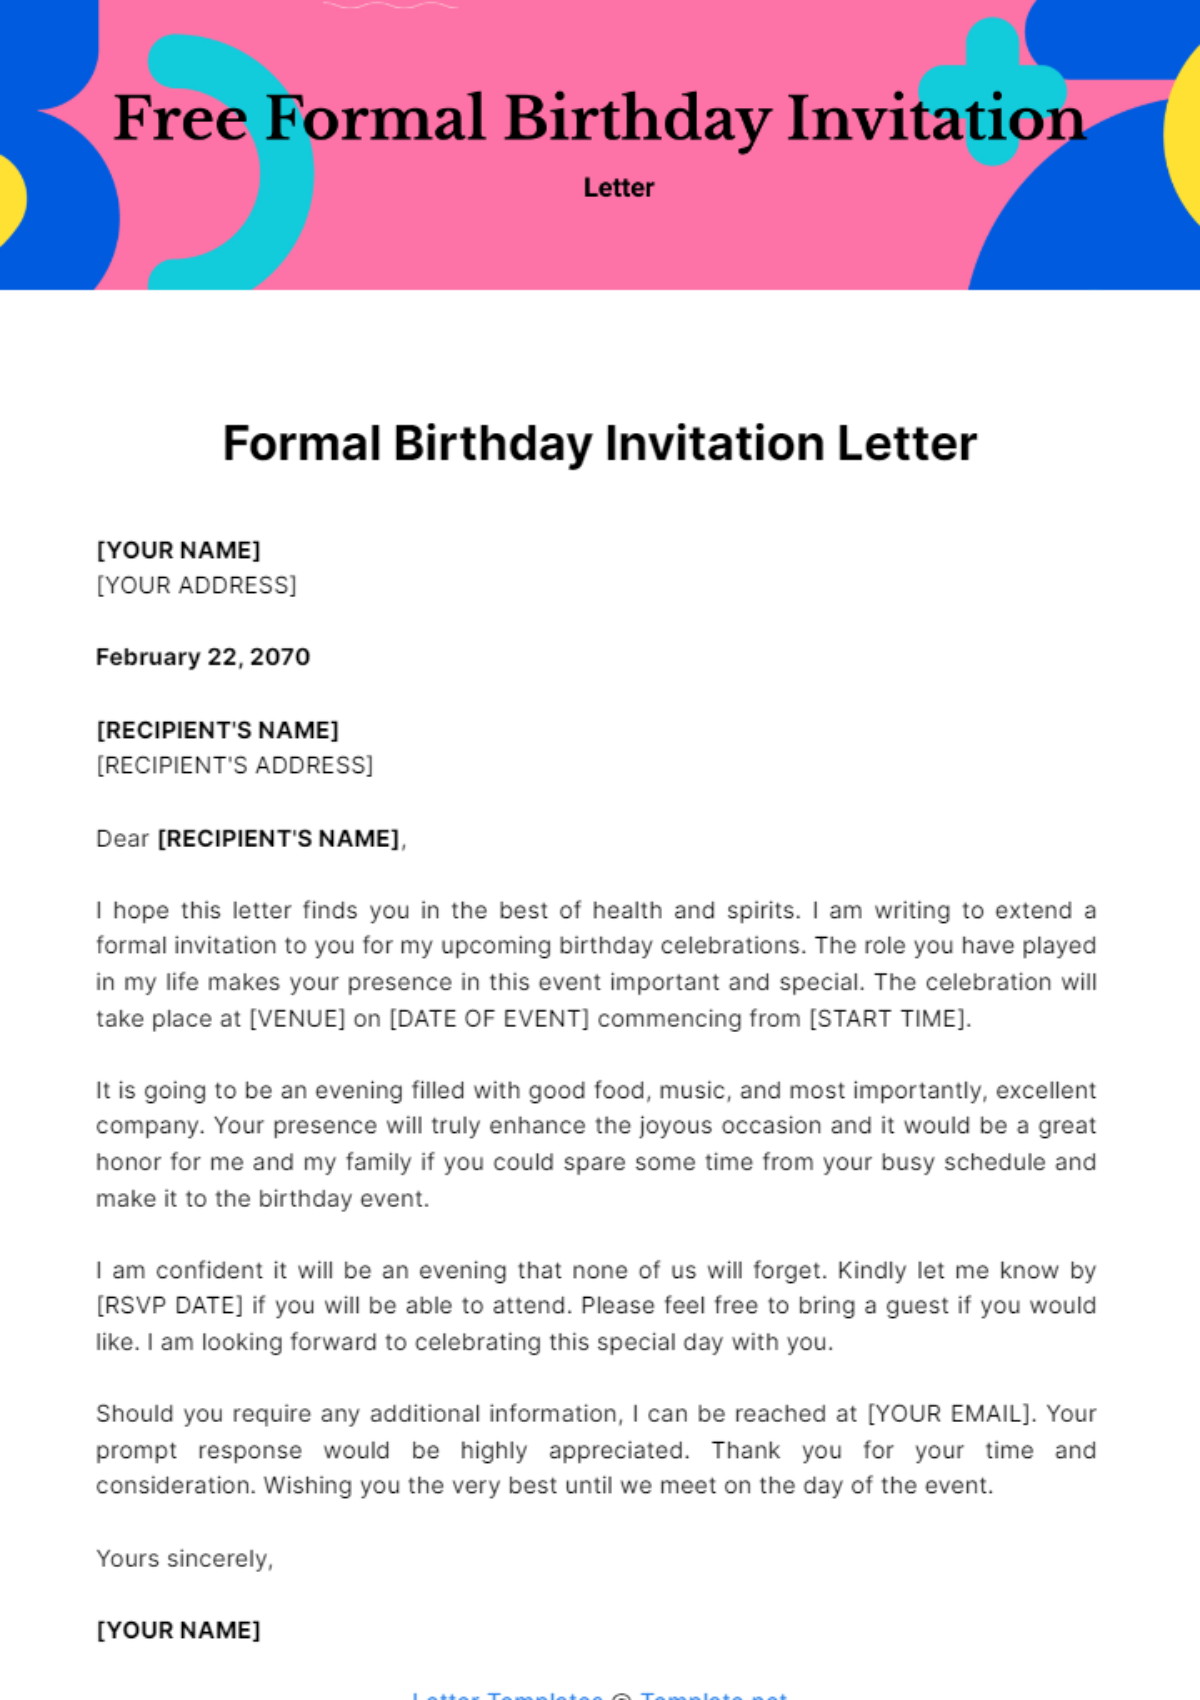 Free Formal Birthday Invitation Letter Template